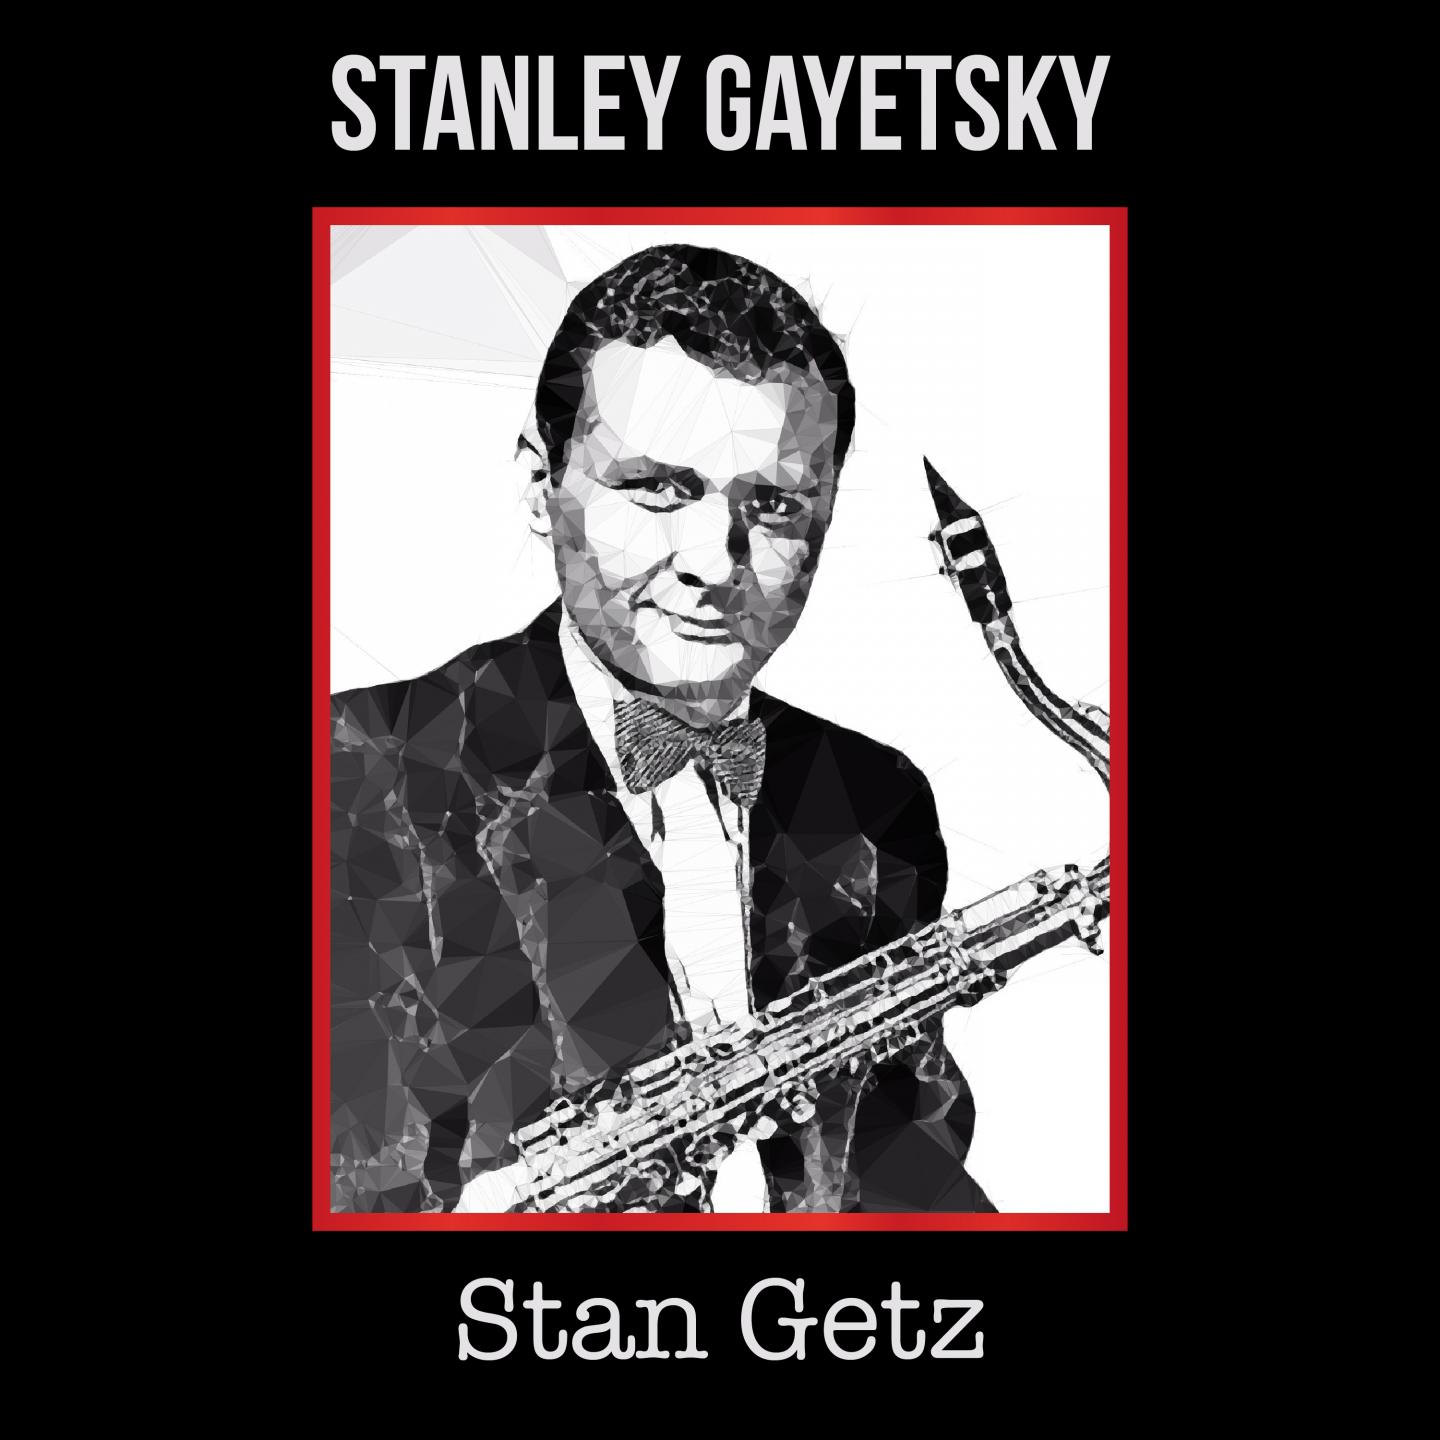 Stanley Gayetsky